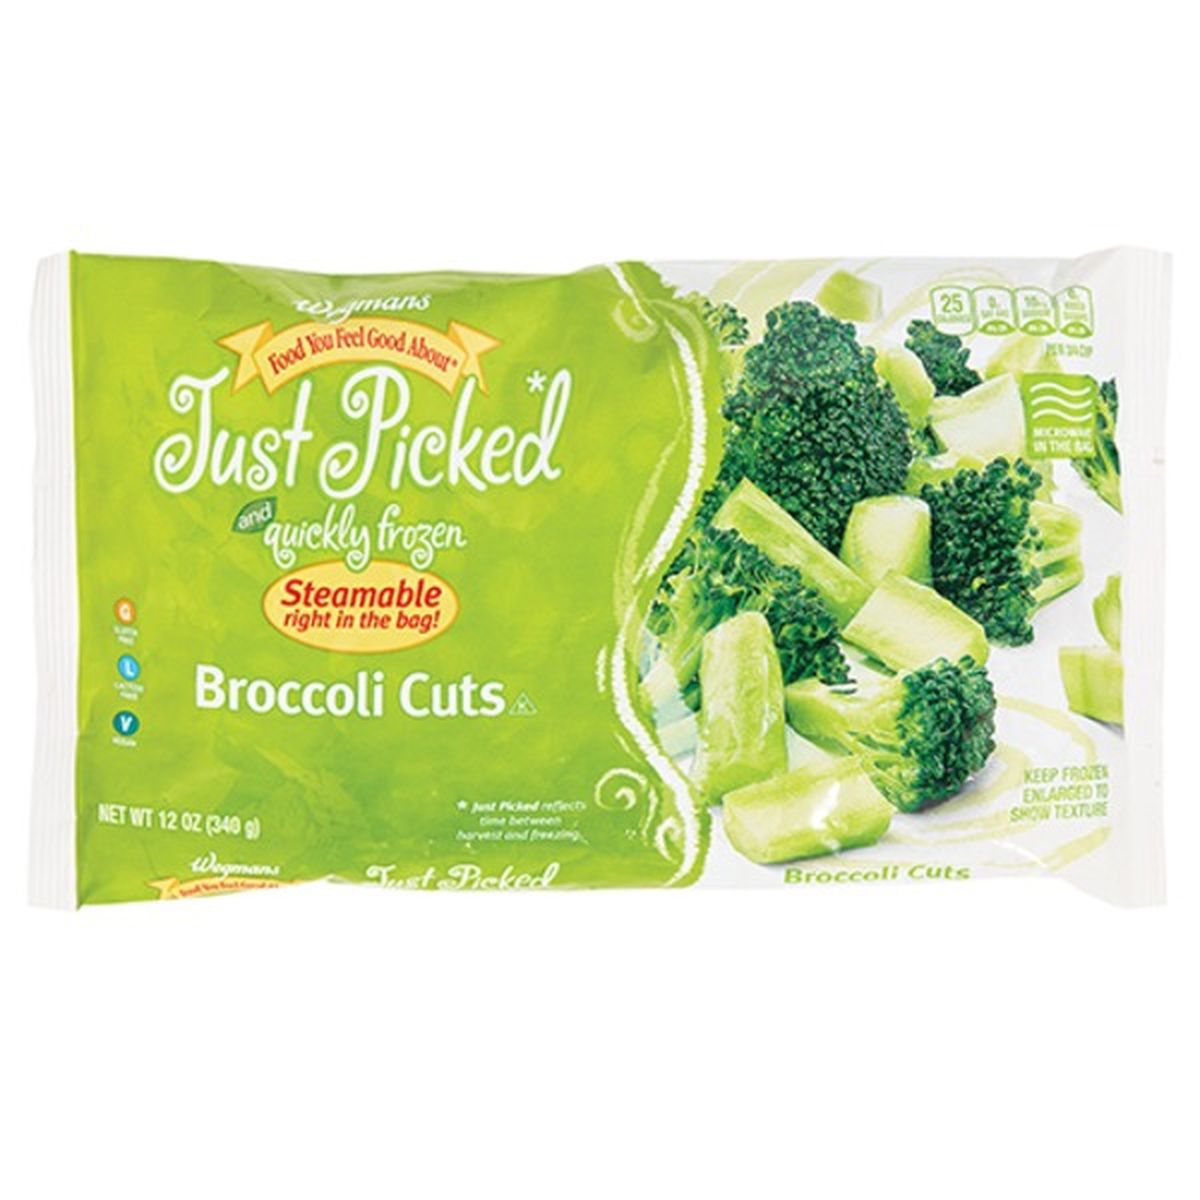 Calories in Wegmans Microwavable Broccoli Cuts